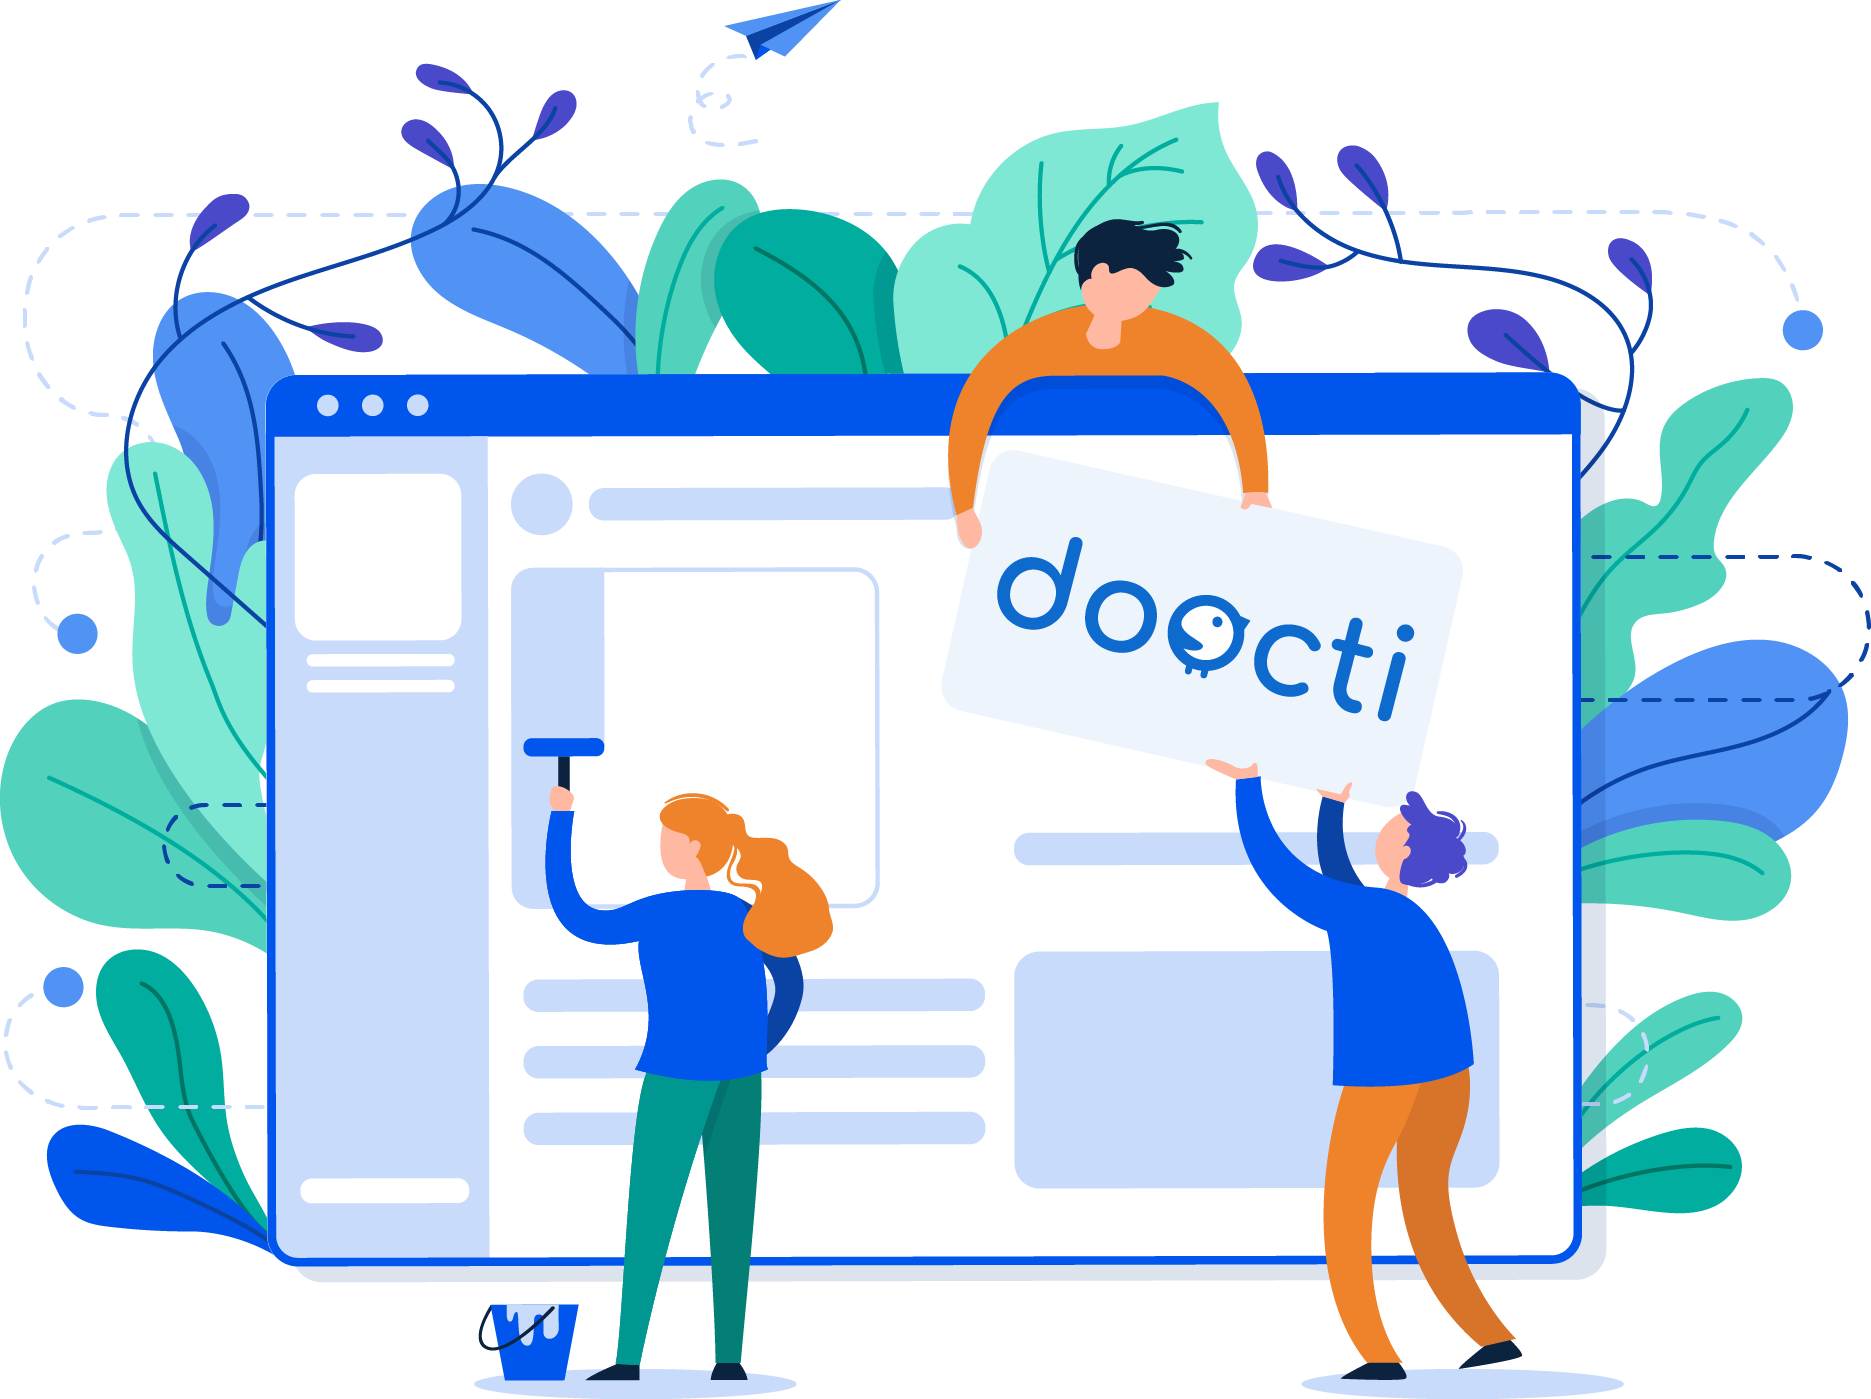 Building up Doocti